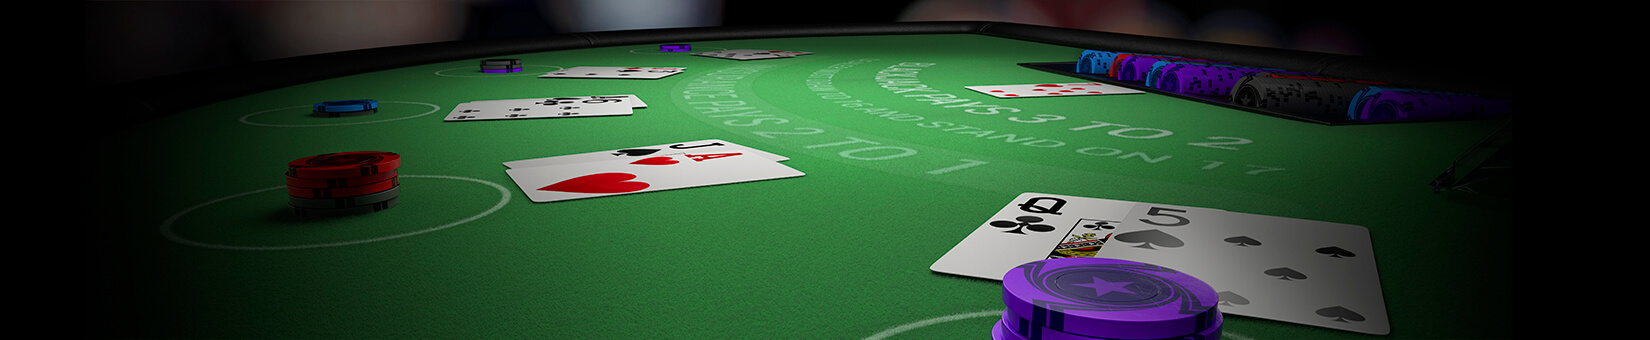 Información casino chilenos pokerstar deportes - 58668